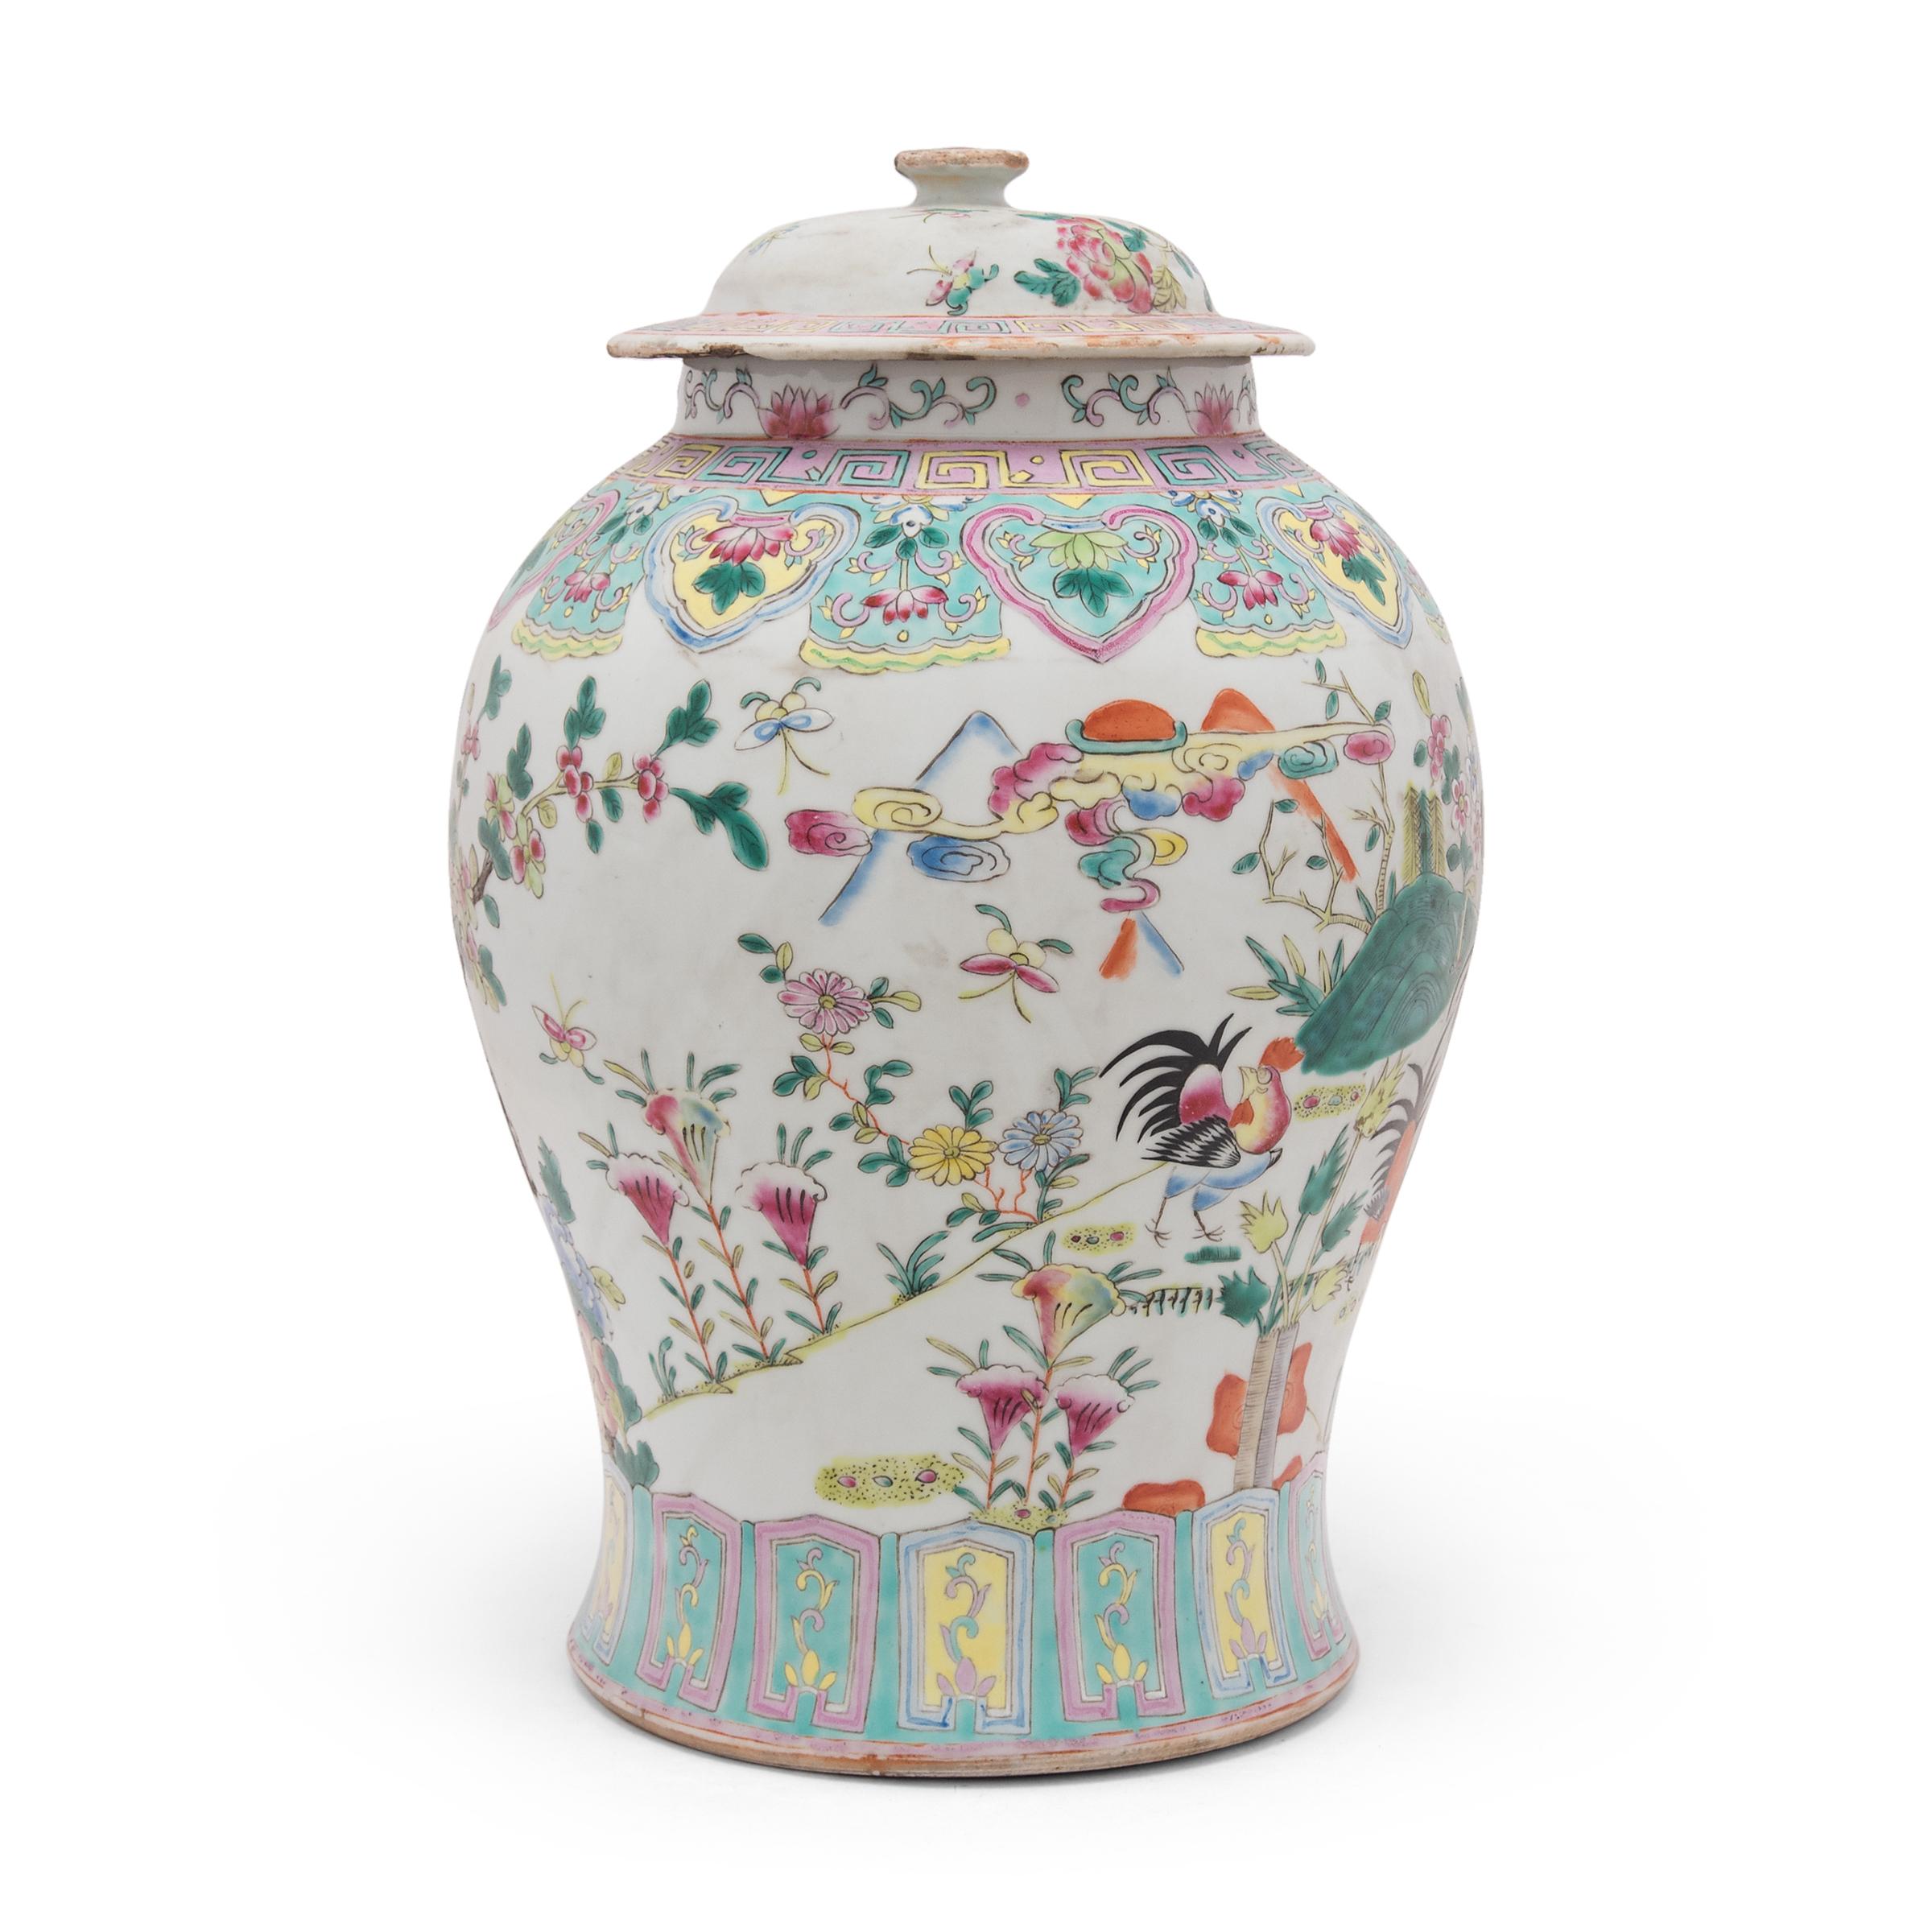 Enameled Chinese Famille Rose Rooster Baluster Jar, c. 1900